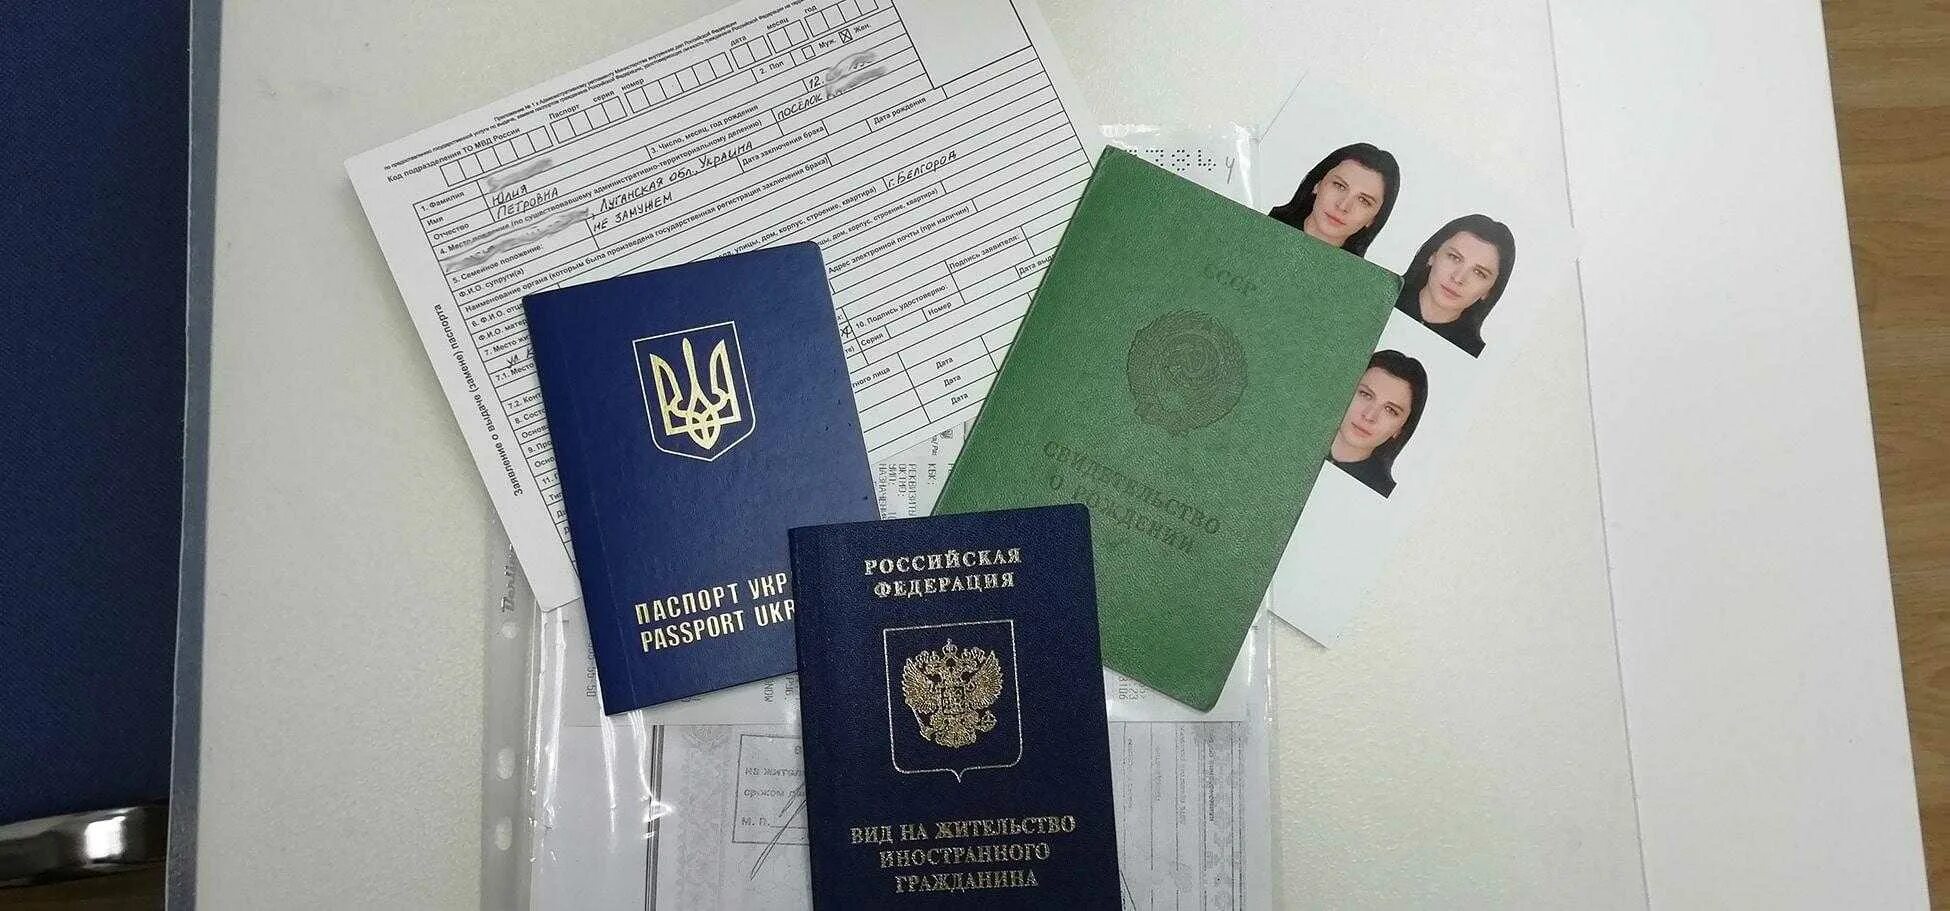 Вид на жительство. Вид на жительство в России. ВНЖ документ. Вид на жительство иностранного гражданина.